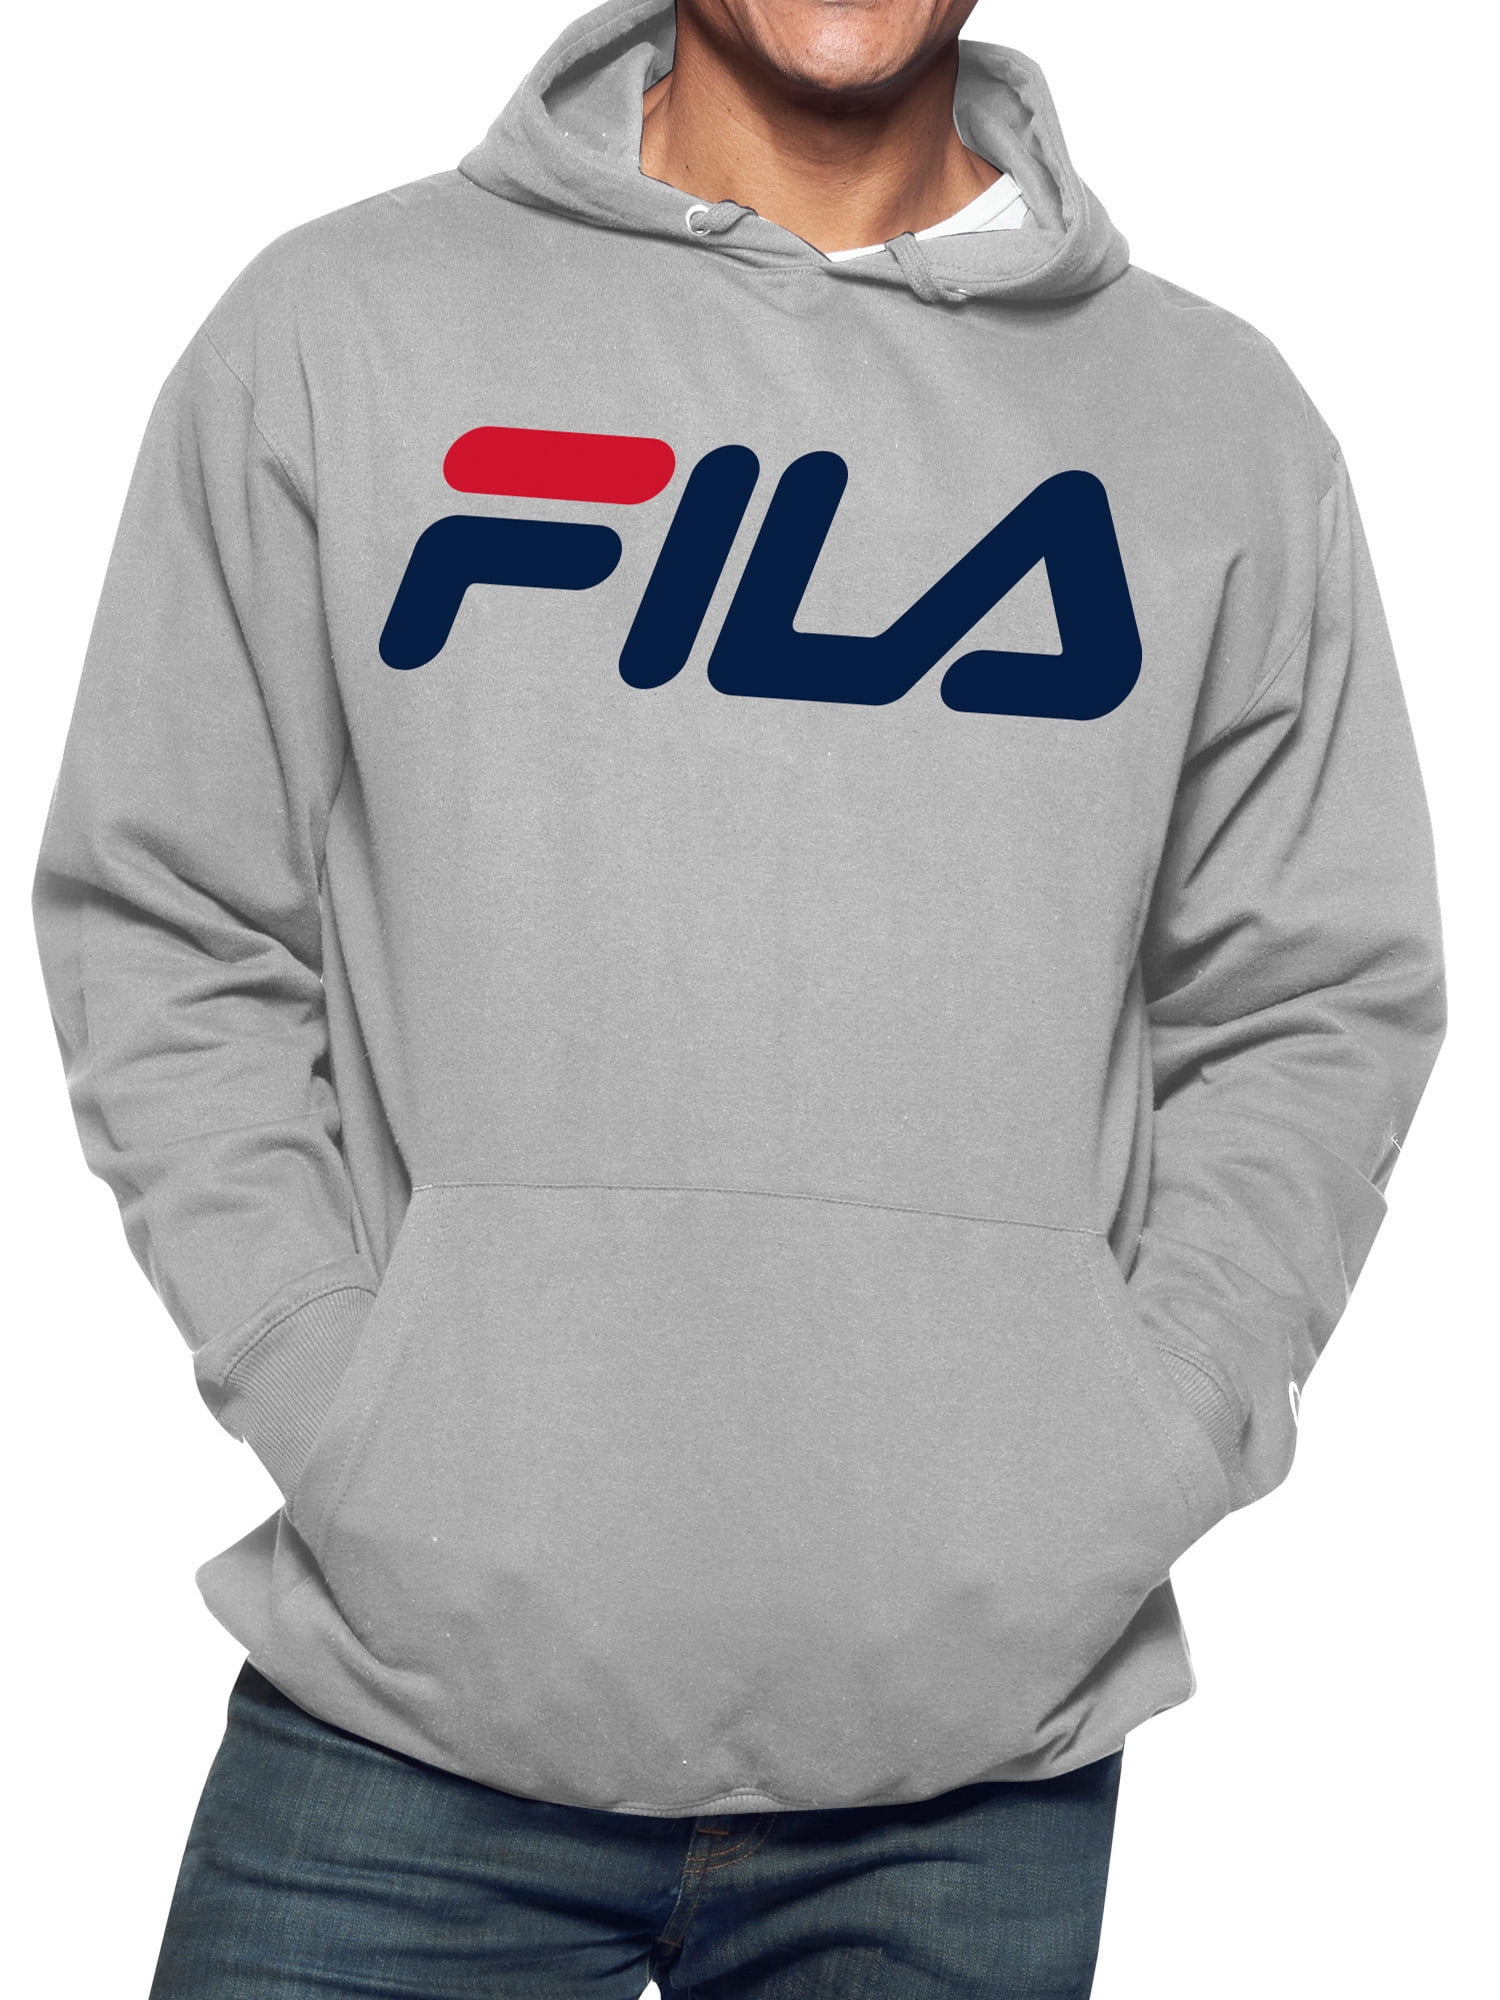 Fila & Tall Men's Classic Hooded fleece sweatshirt Graphic design , Sizes XLT-6XL - Walmart.com